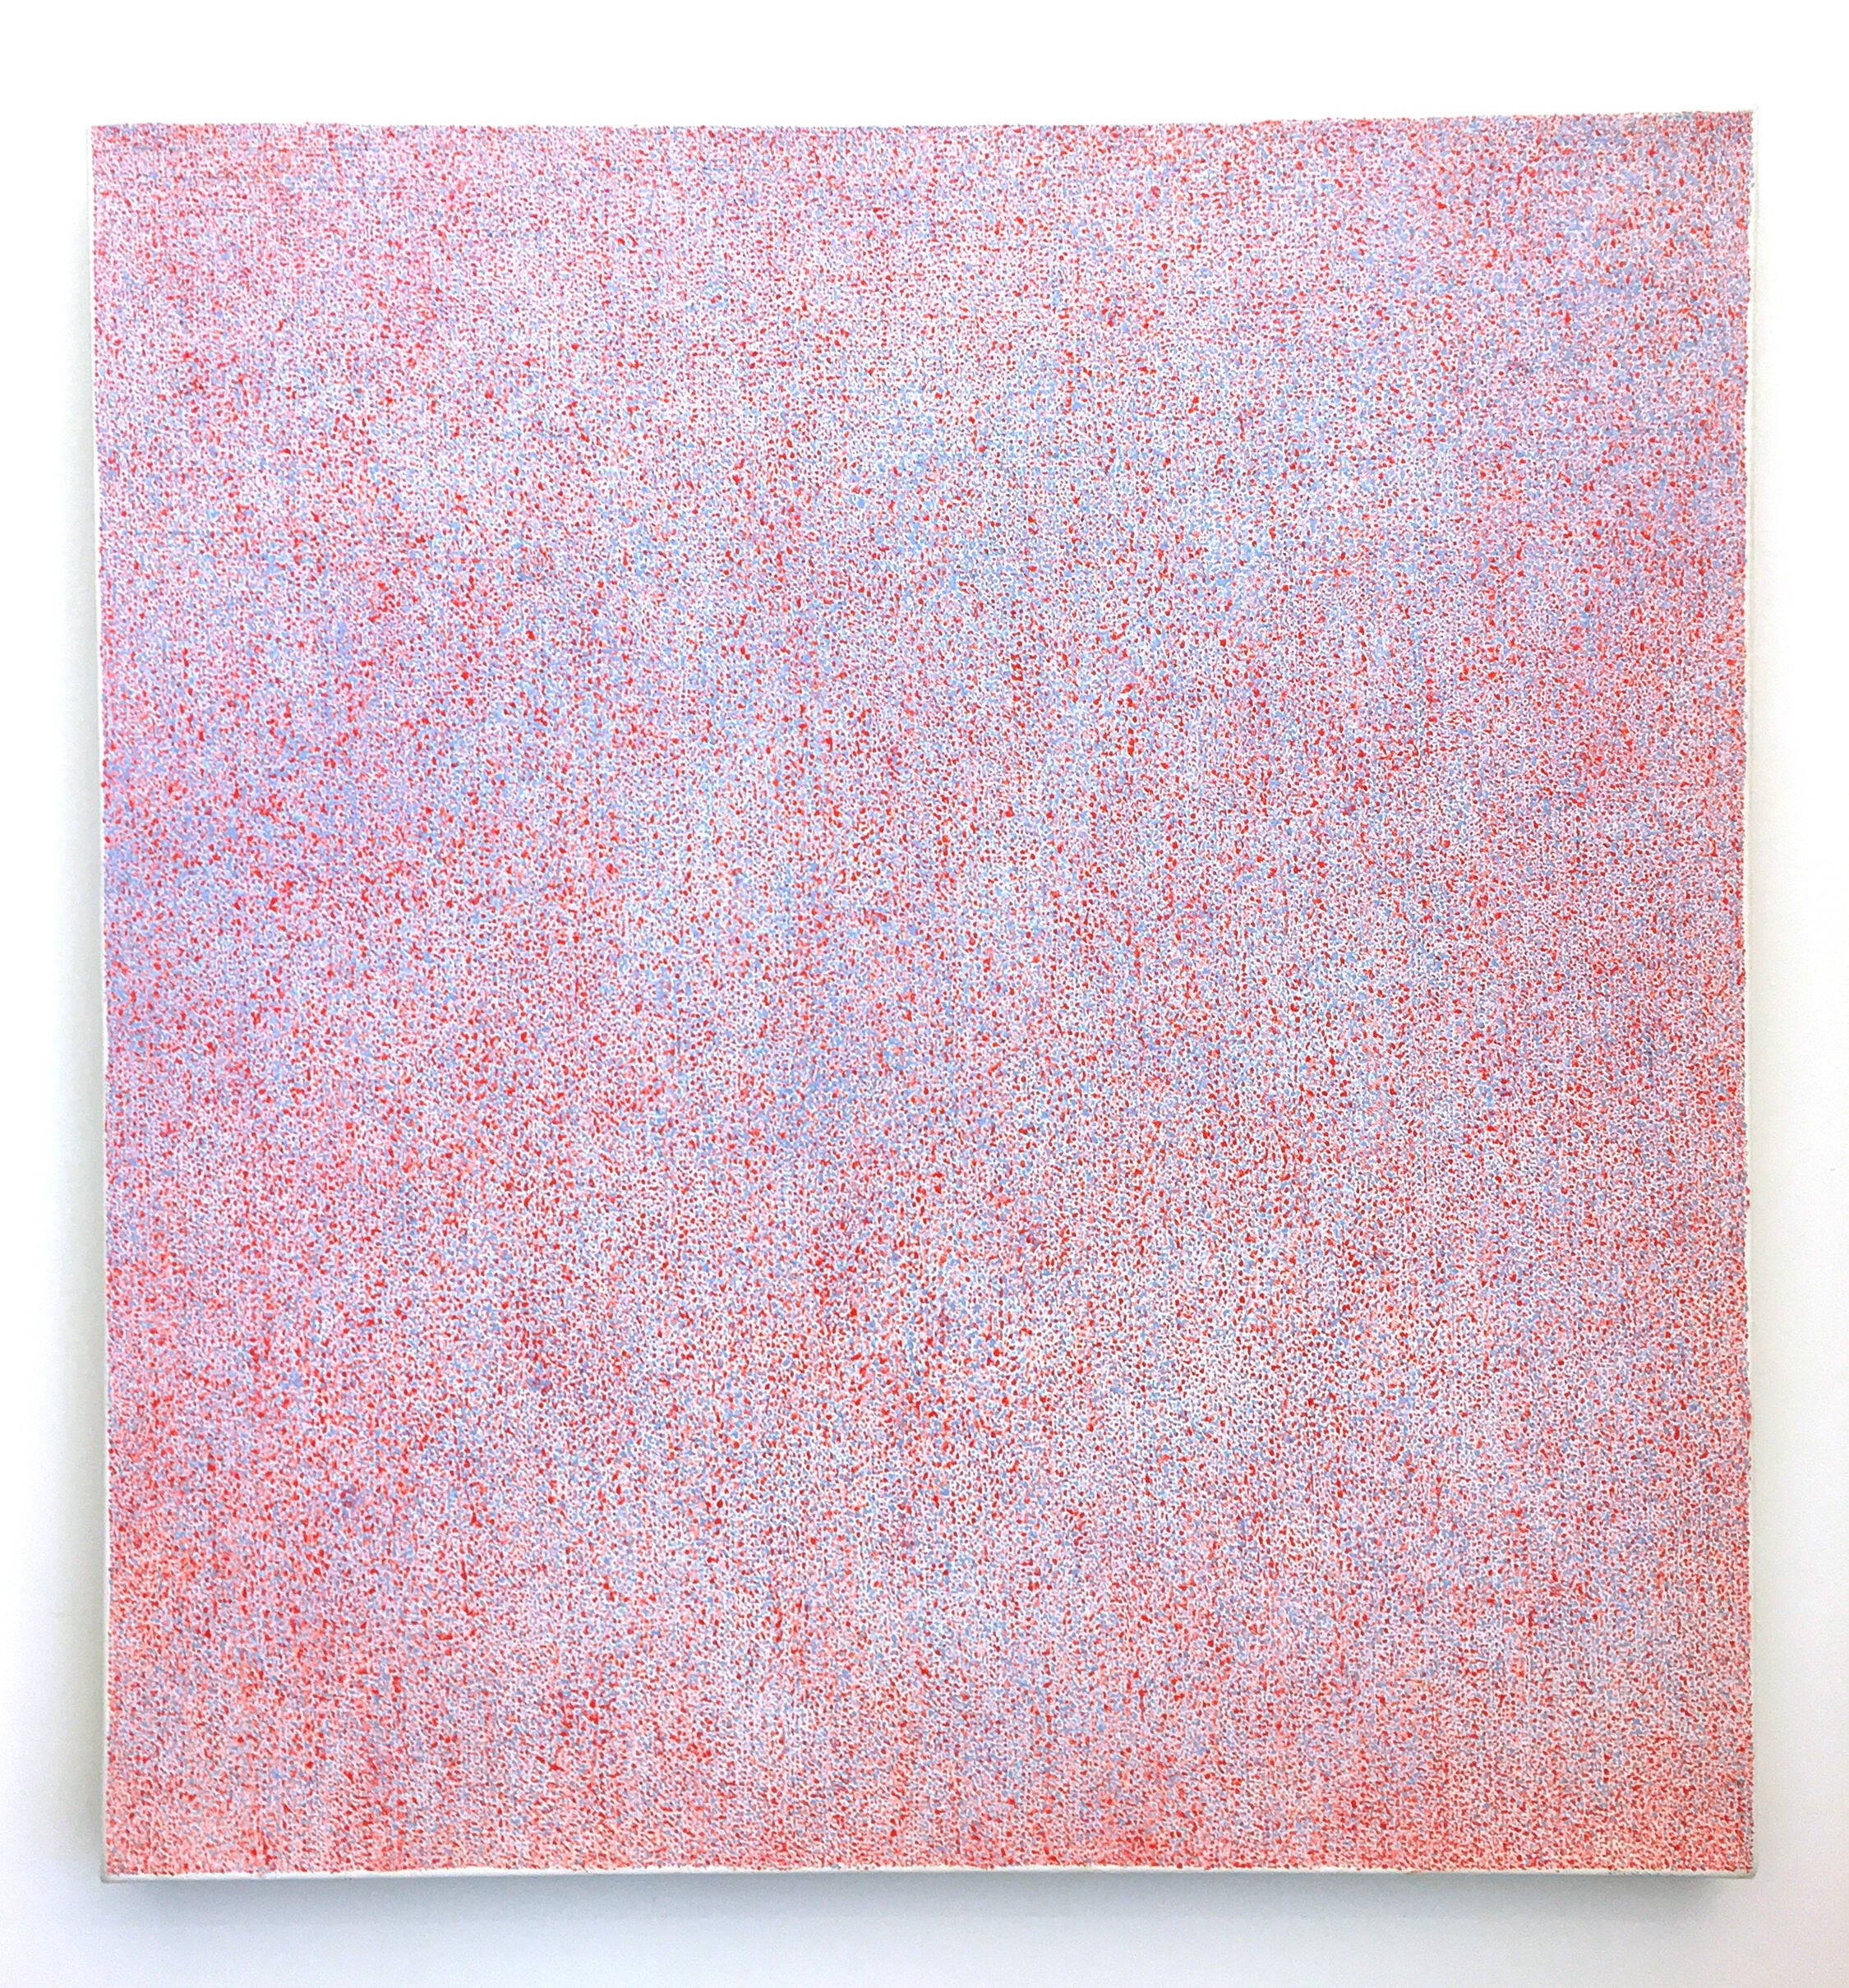   Howard Smith,   Flamingo , 2010. Oil on canvas, 30 x 28 in. 